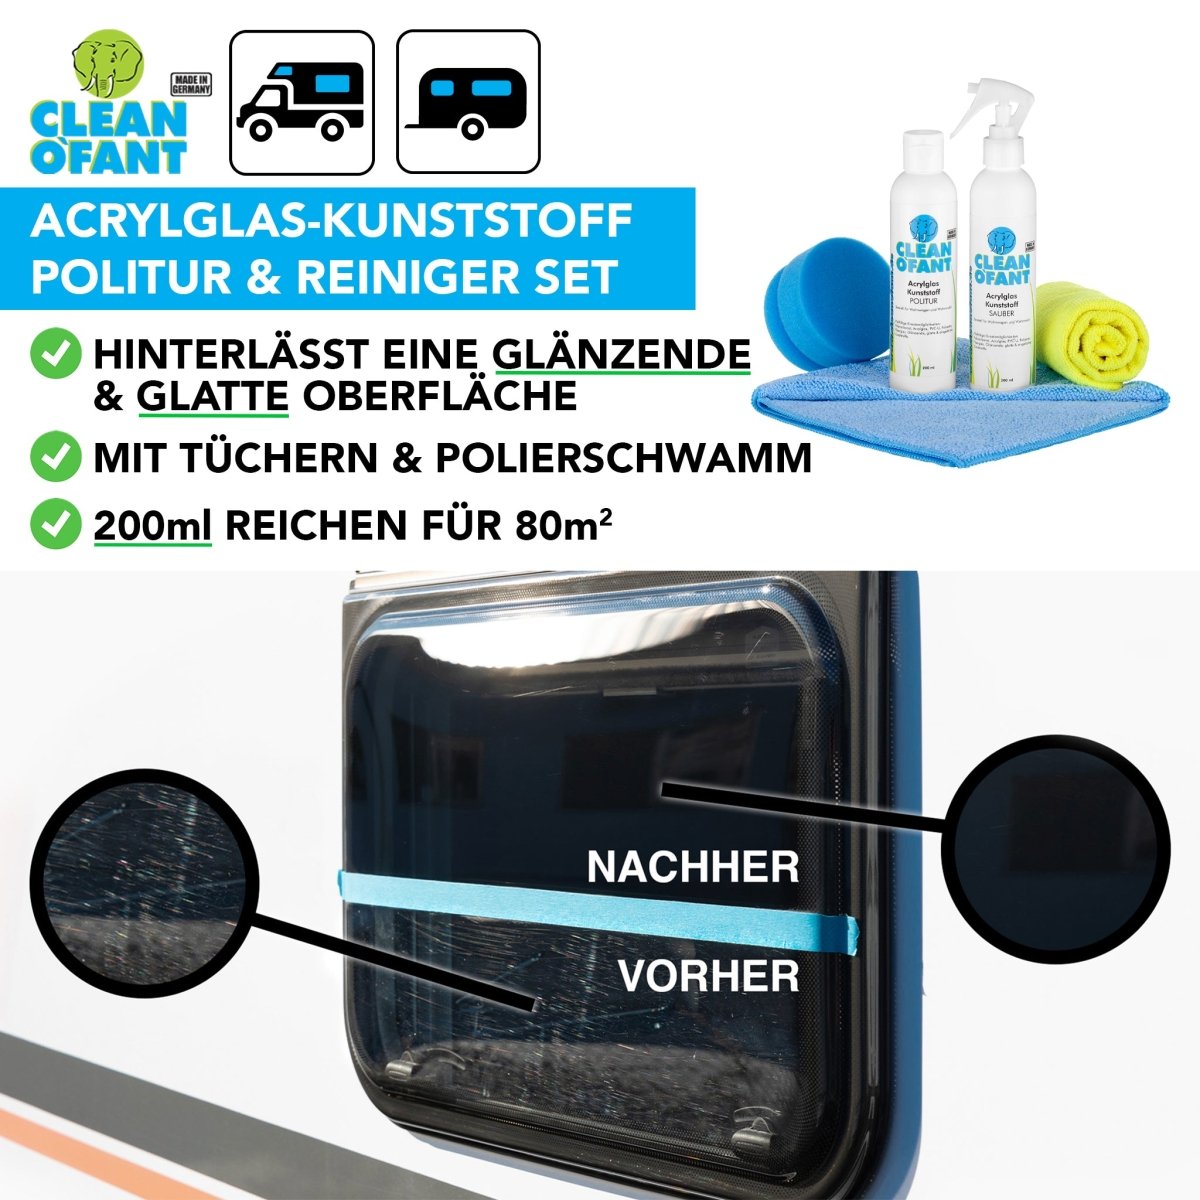 Wohnwagen & Wohnmobil Pflegeset XXL - CLEANOFANT